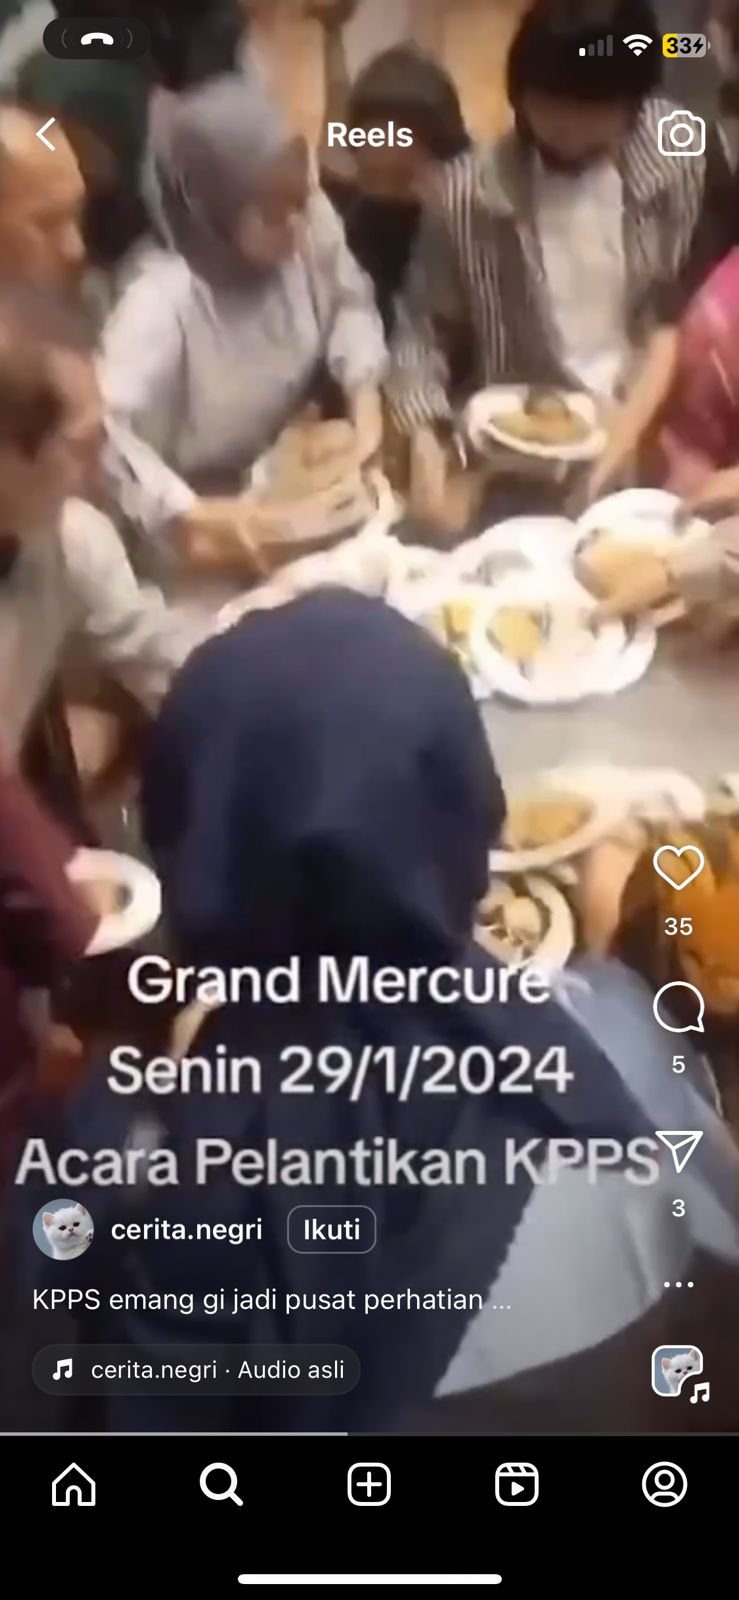 Viral Video KPPS Berebut Makanan di Hotel Grand Mercure, Netizen: Miris Lihatnya